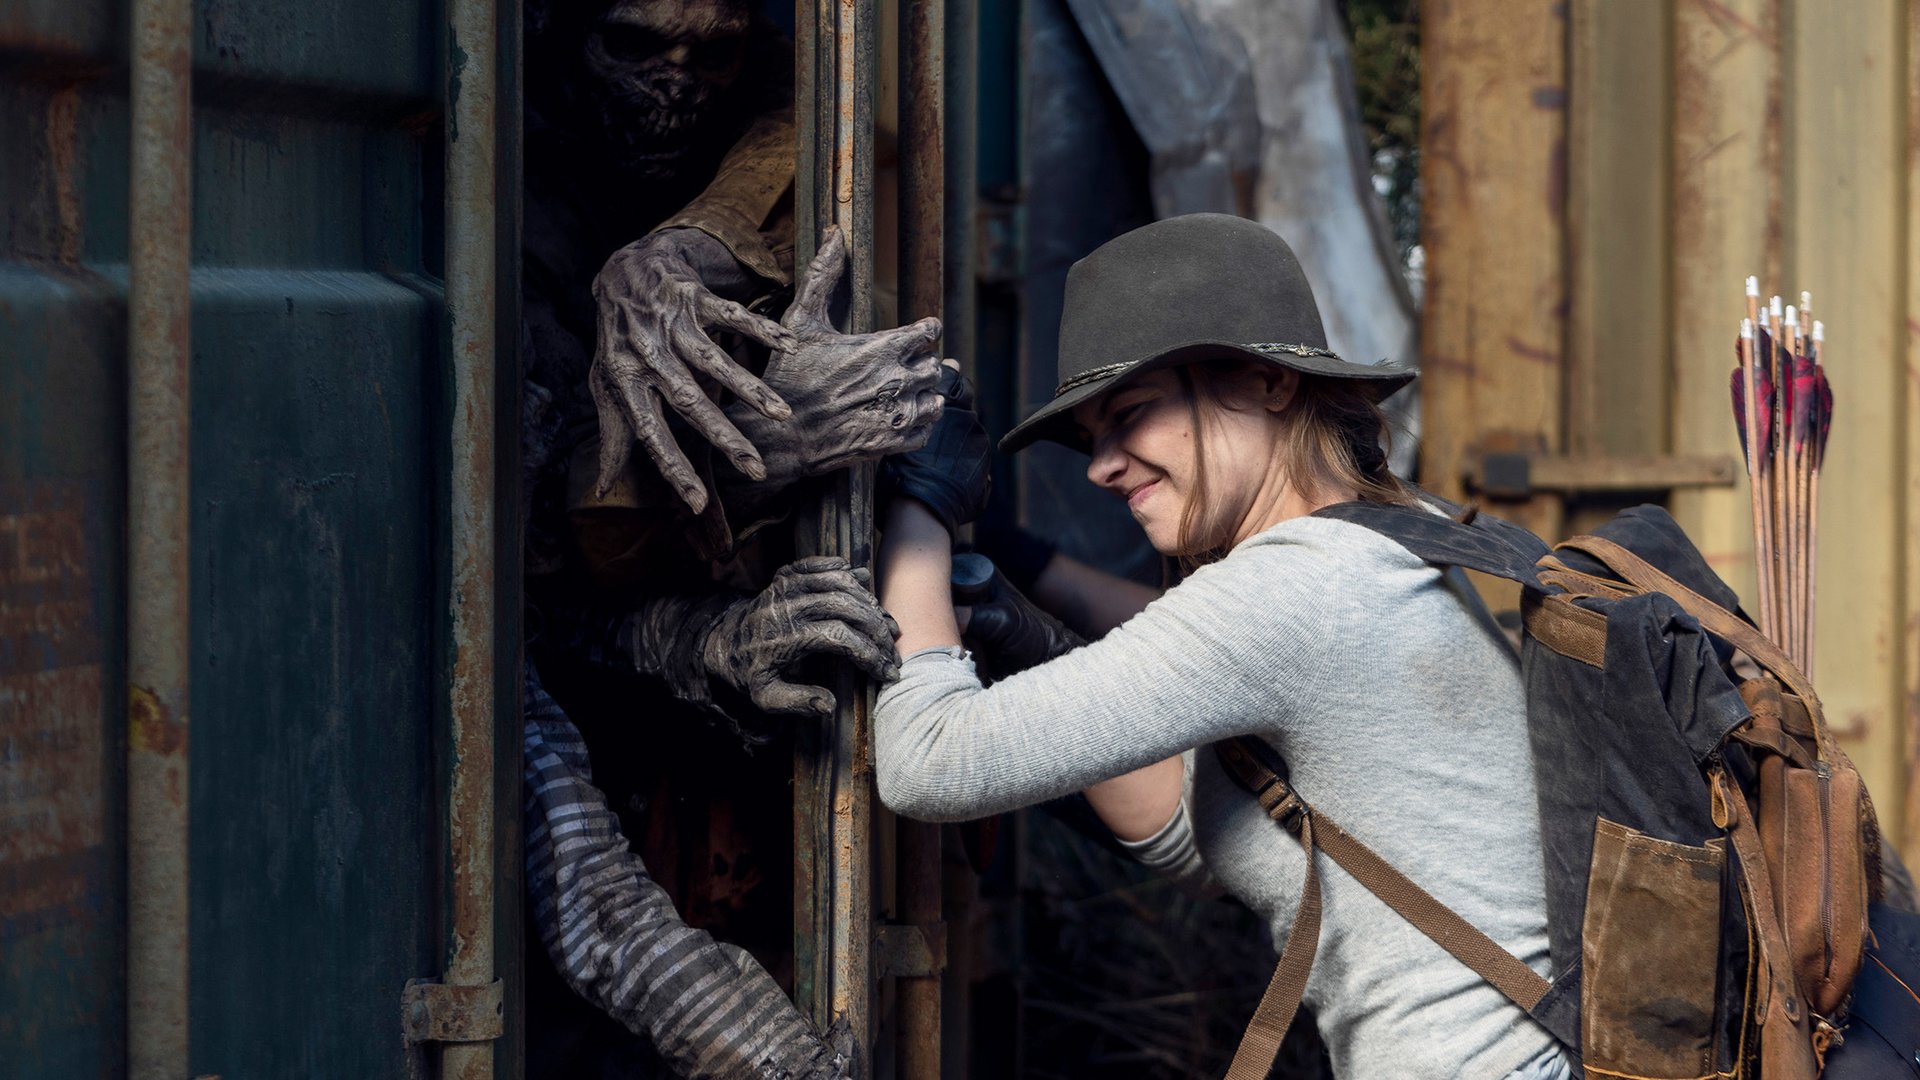 Zombie plague around the world?  “The Walking Dead” – Finally Provides an Answer KINO.de